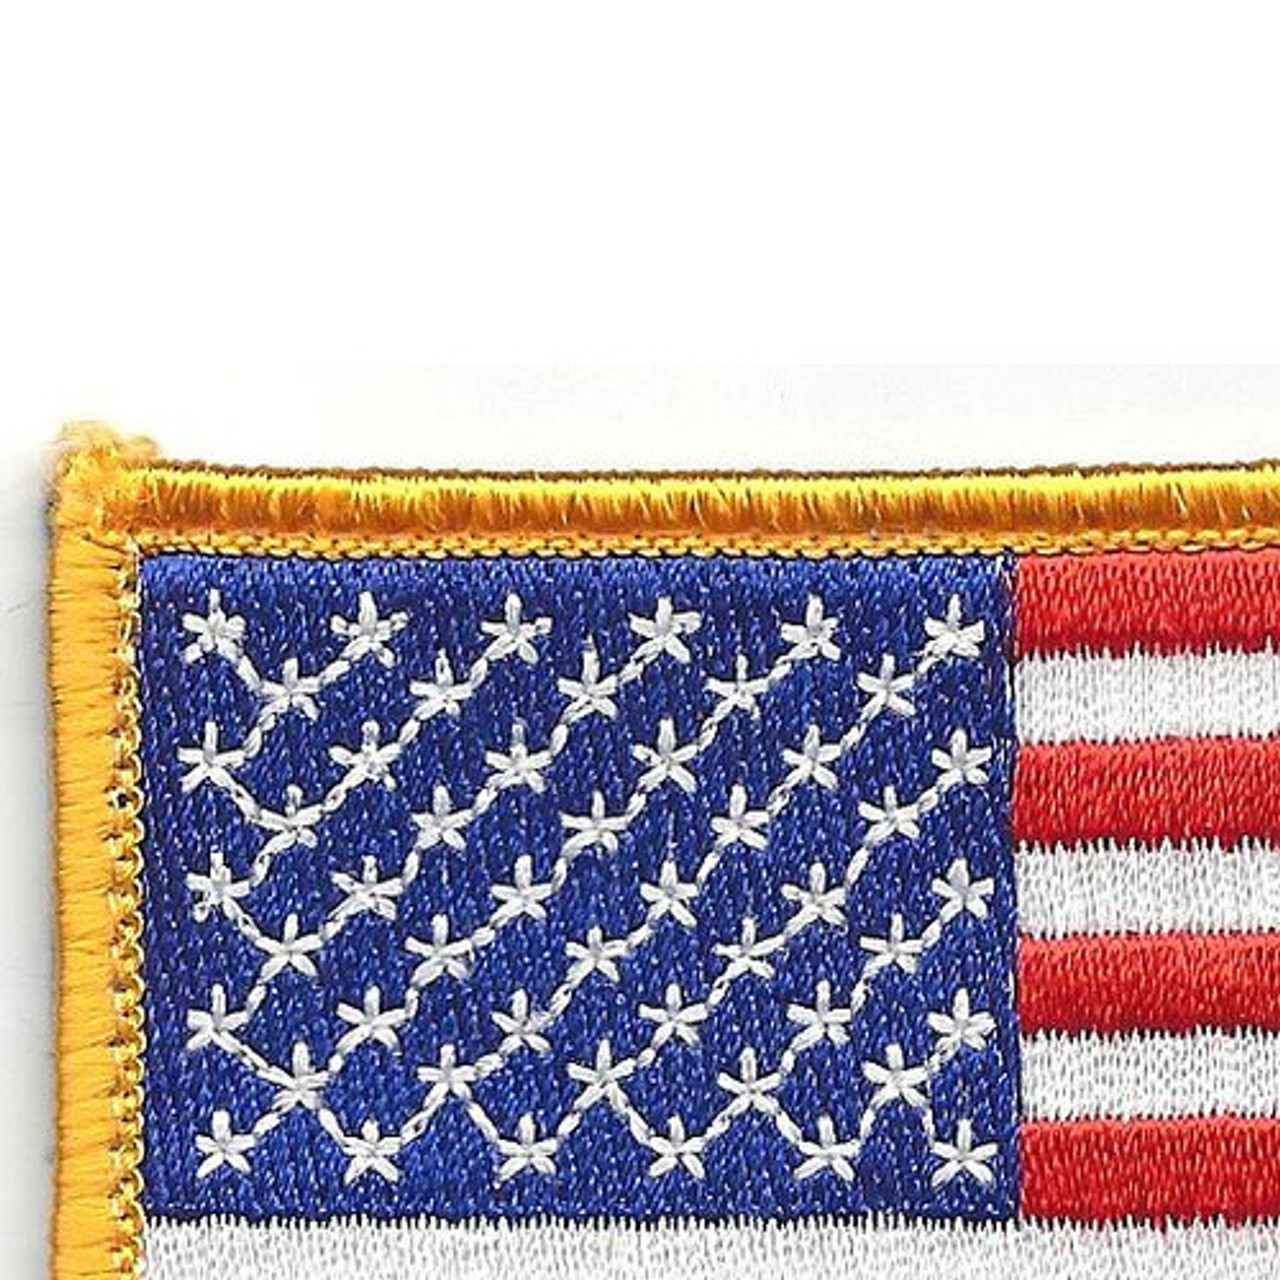 The Micro 2 x 1 American Flag patch (VELCRO® Brand Hook/loop